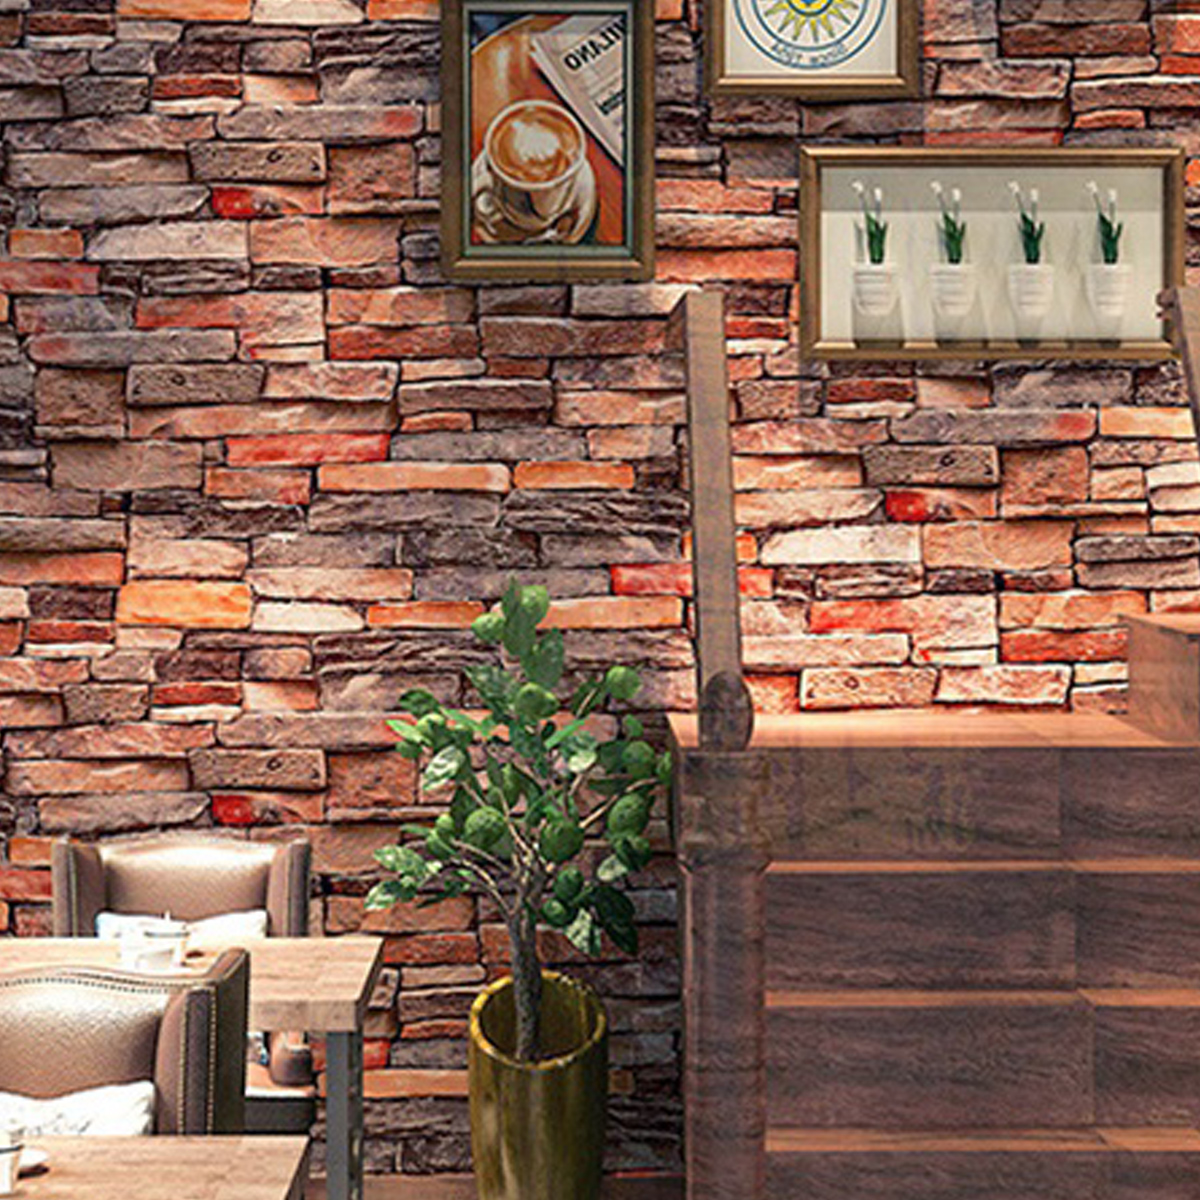 3D-Simulation-Brick-Wall-Paper-Self-Adhesive-Brick-Stone-Wallpaper-Fashion-Restaurant-Hotel-Store-De-1859008-7